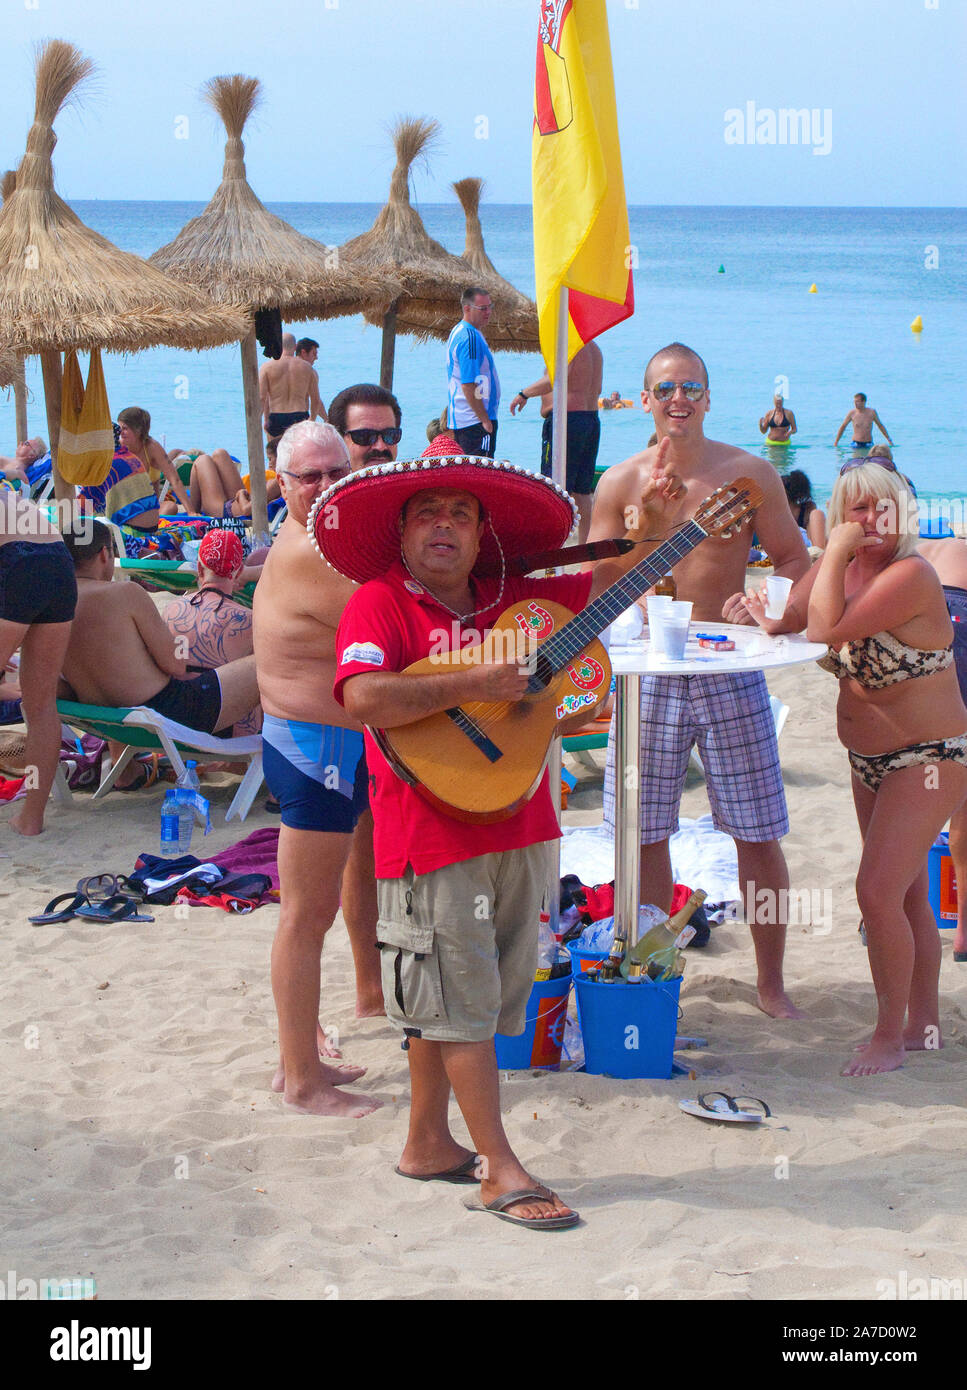 Guitar Player mit sombreroe am Strand Ballermann, Playa de Palma, El Arenal, Mallorca, Balearen, Spanien Stockfoto